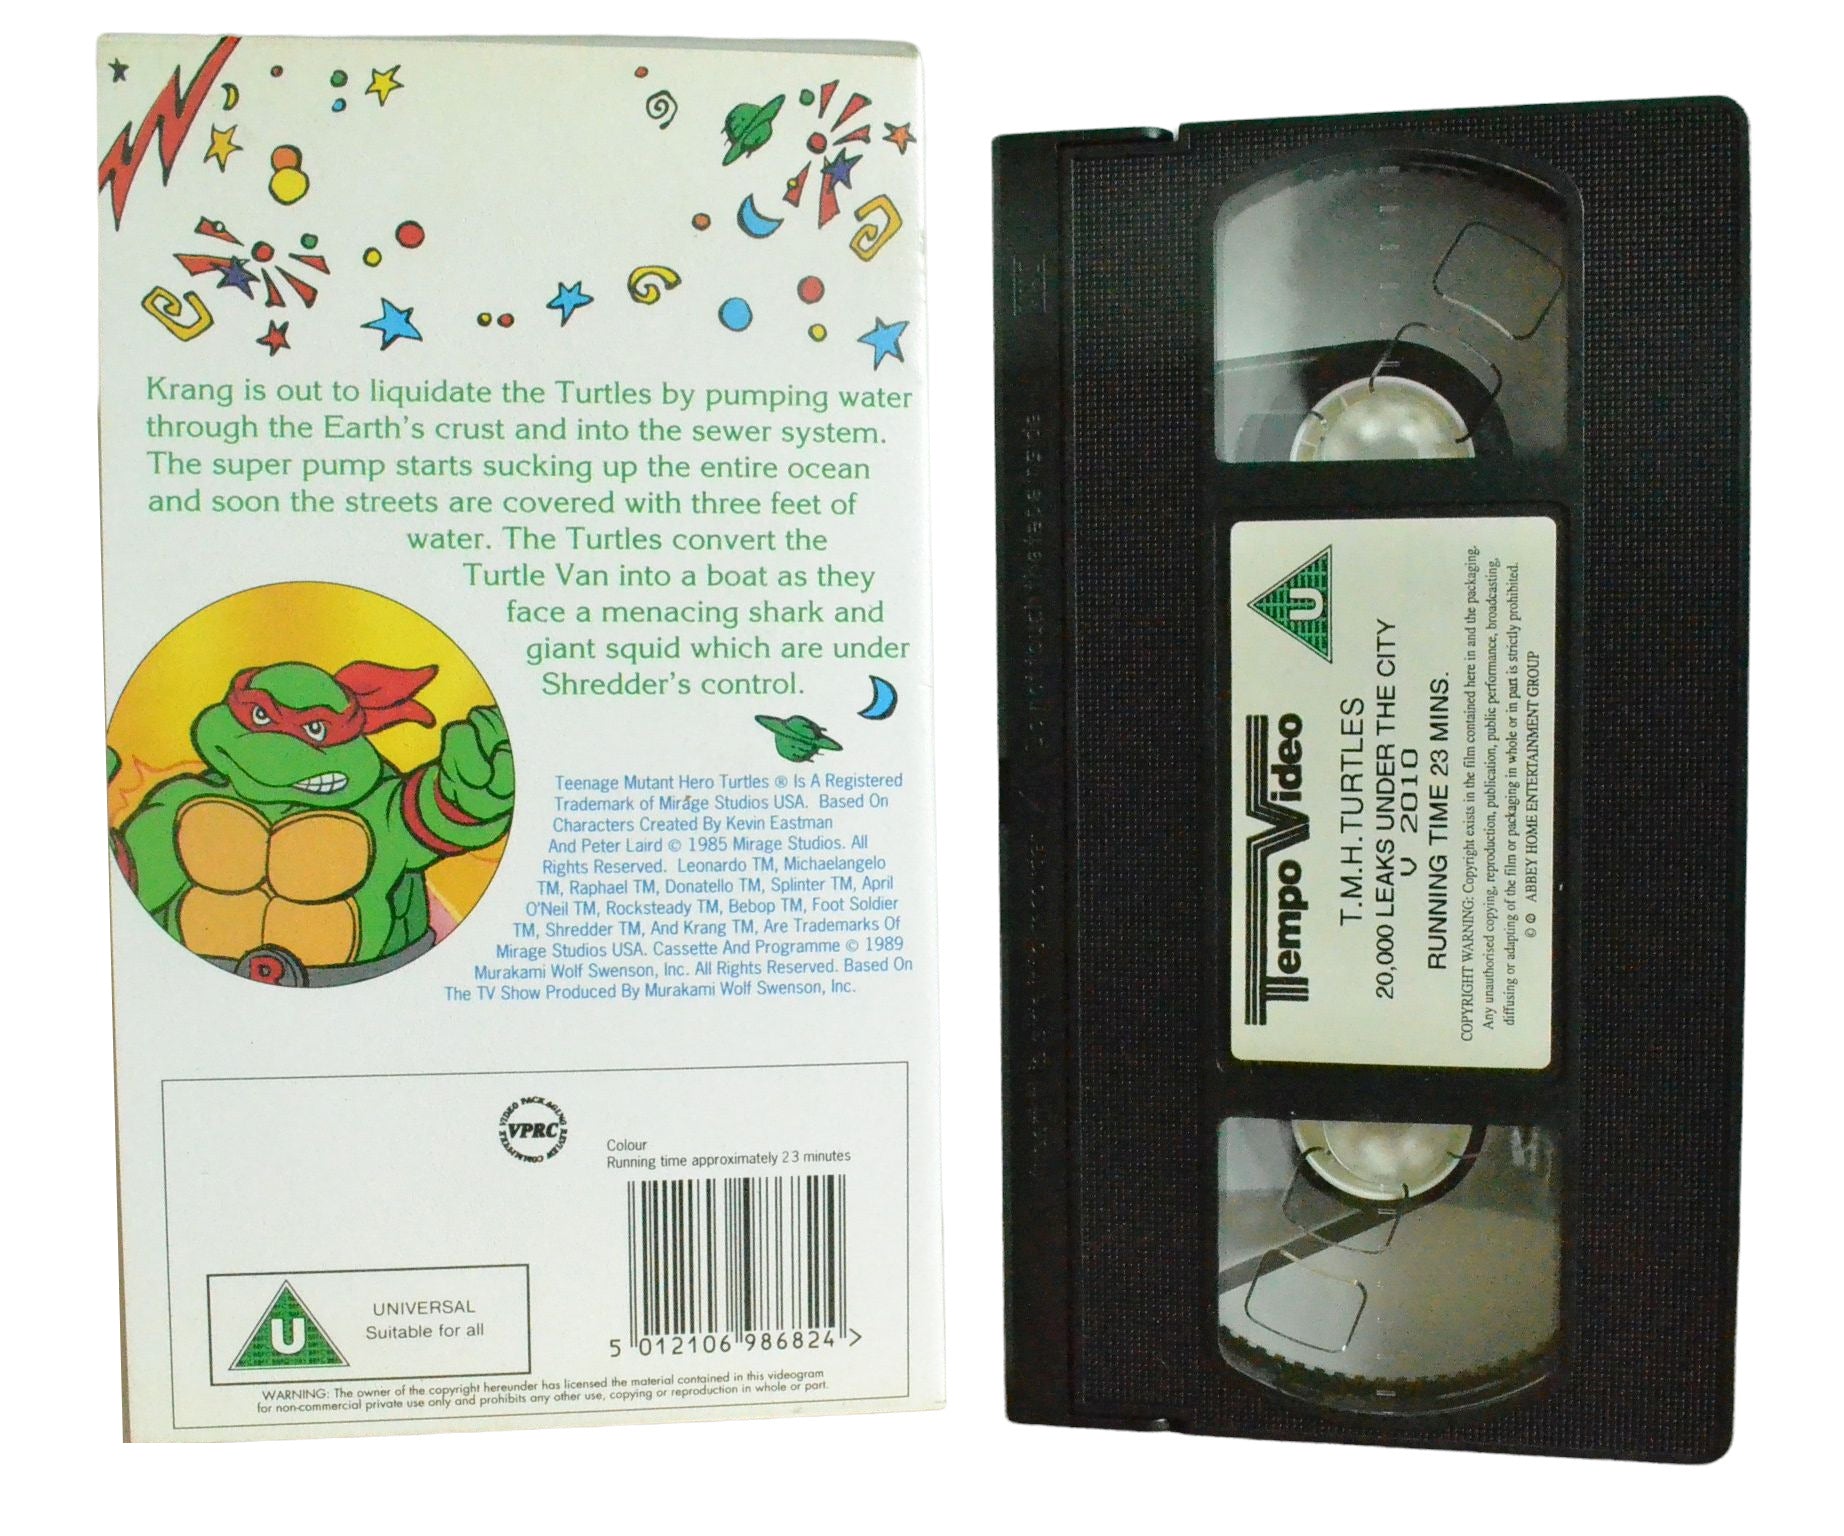 Teenage Mutant Hero Turtles 20,000 Leaks Under The City - Tempo Video - Children's - Pal VHS-